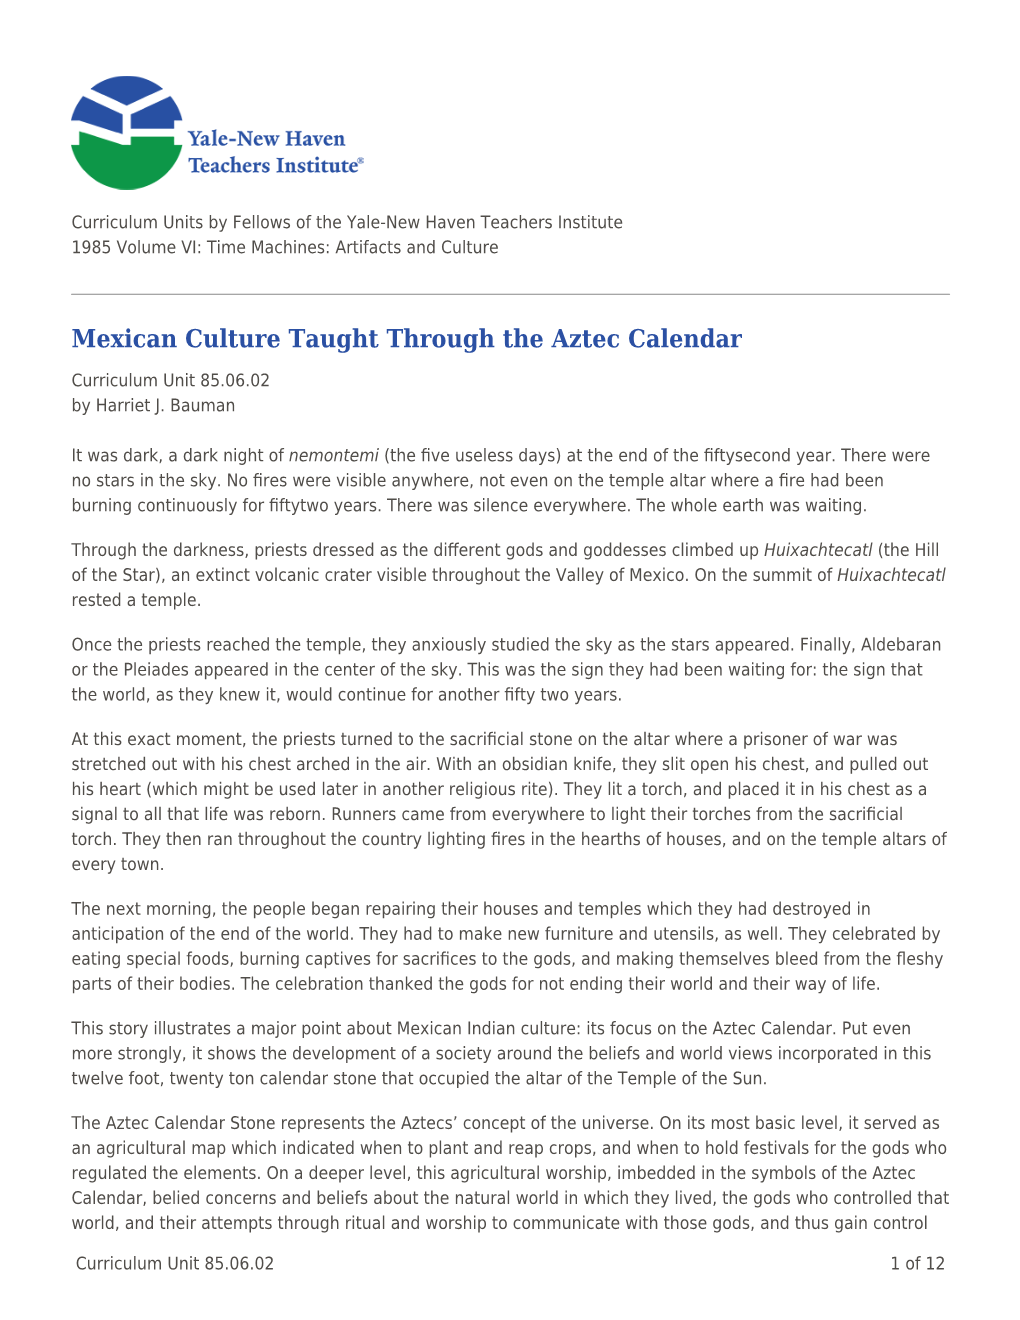 Mexican Culture Taught Through the Aztec Calendar